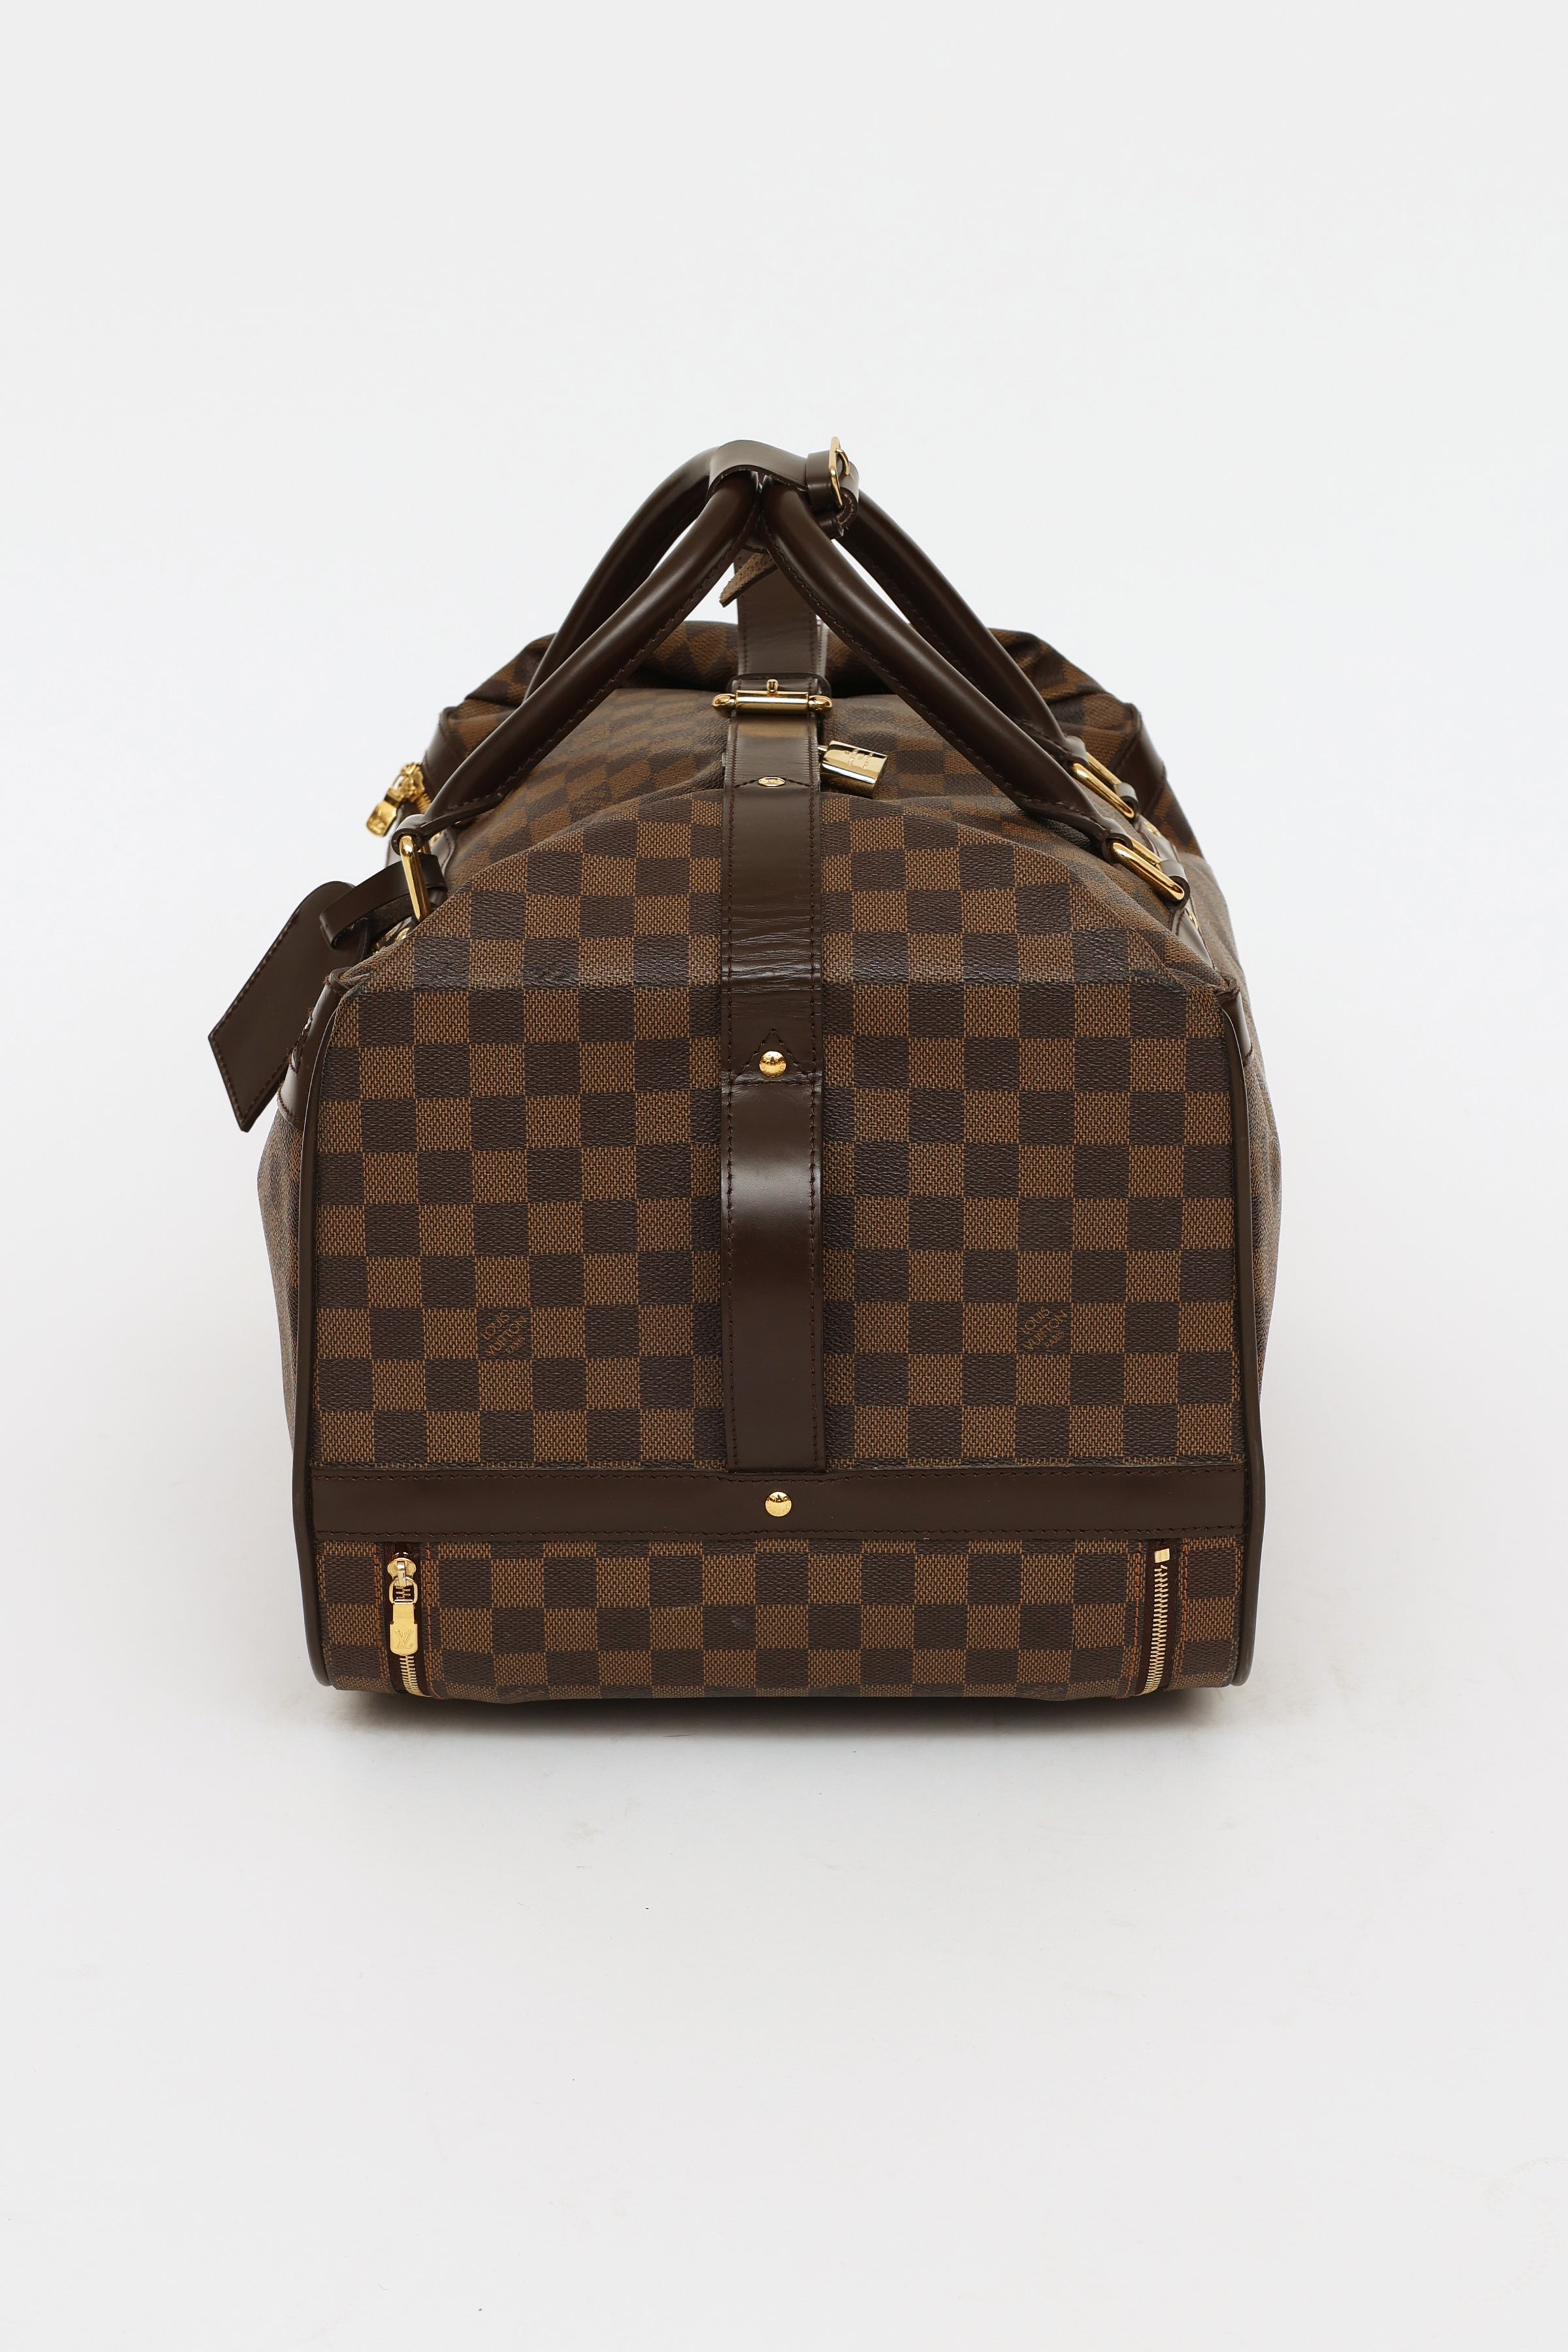 Louis Vuitton Eole 50 Damier Ebene Rolling Luggage Used (3788)